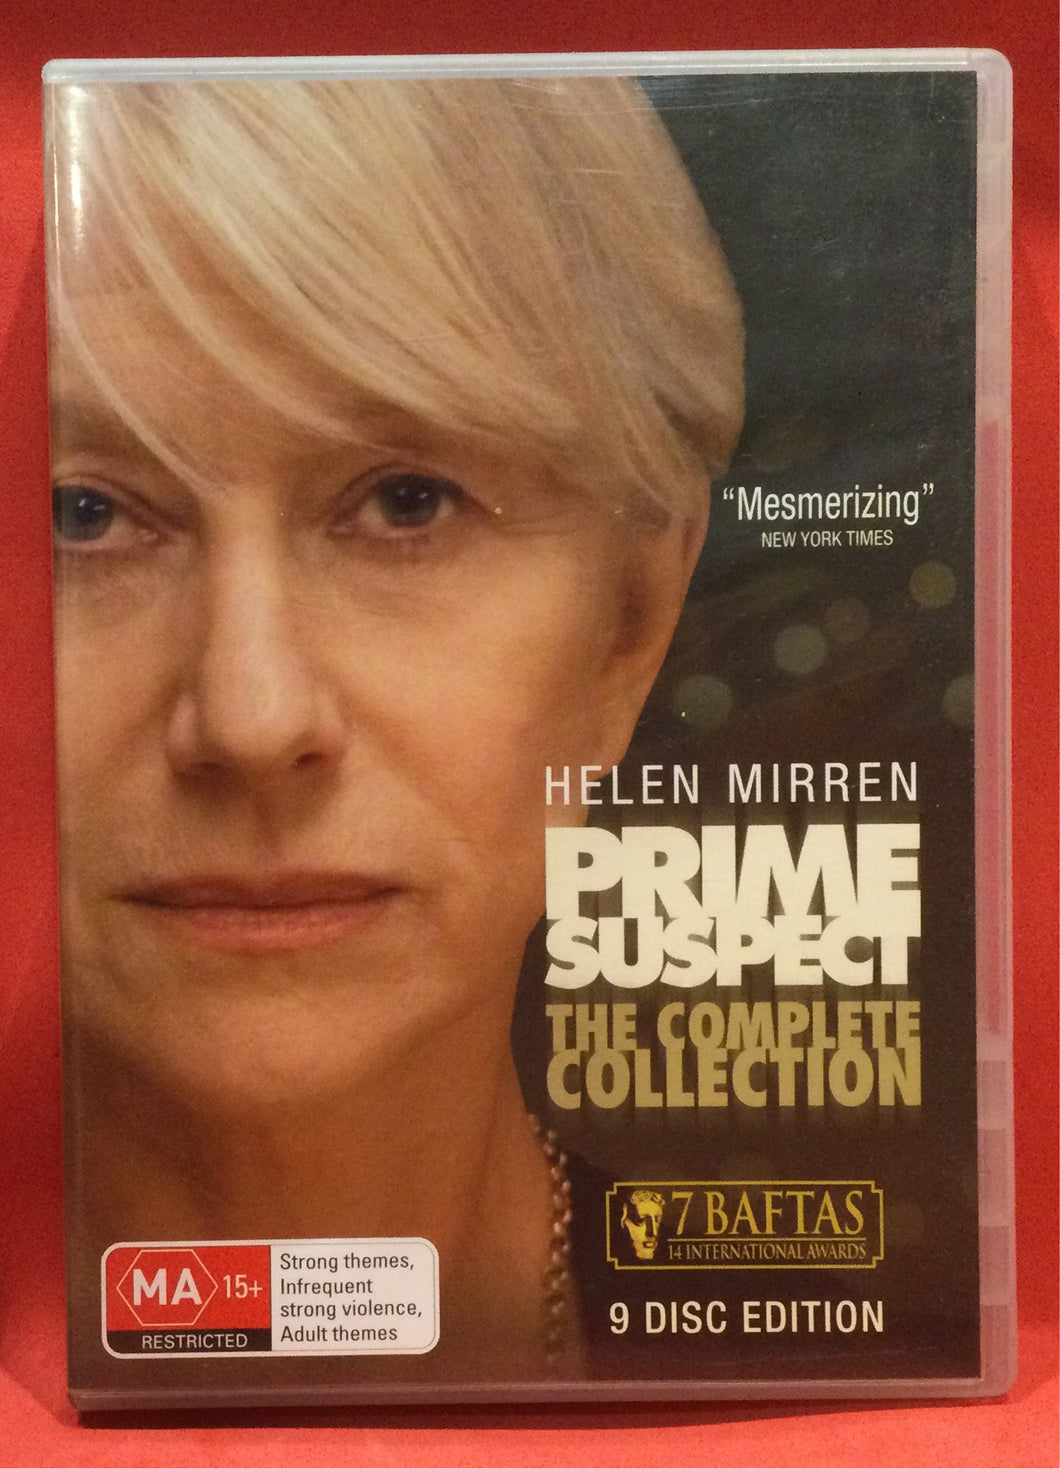 PRIME SUSPECT (HELEN MIRREN)  - COMPLETE COLLECTION - 9 DVD DISCS  (USED)